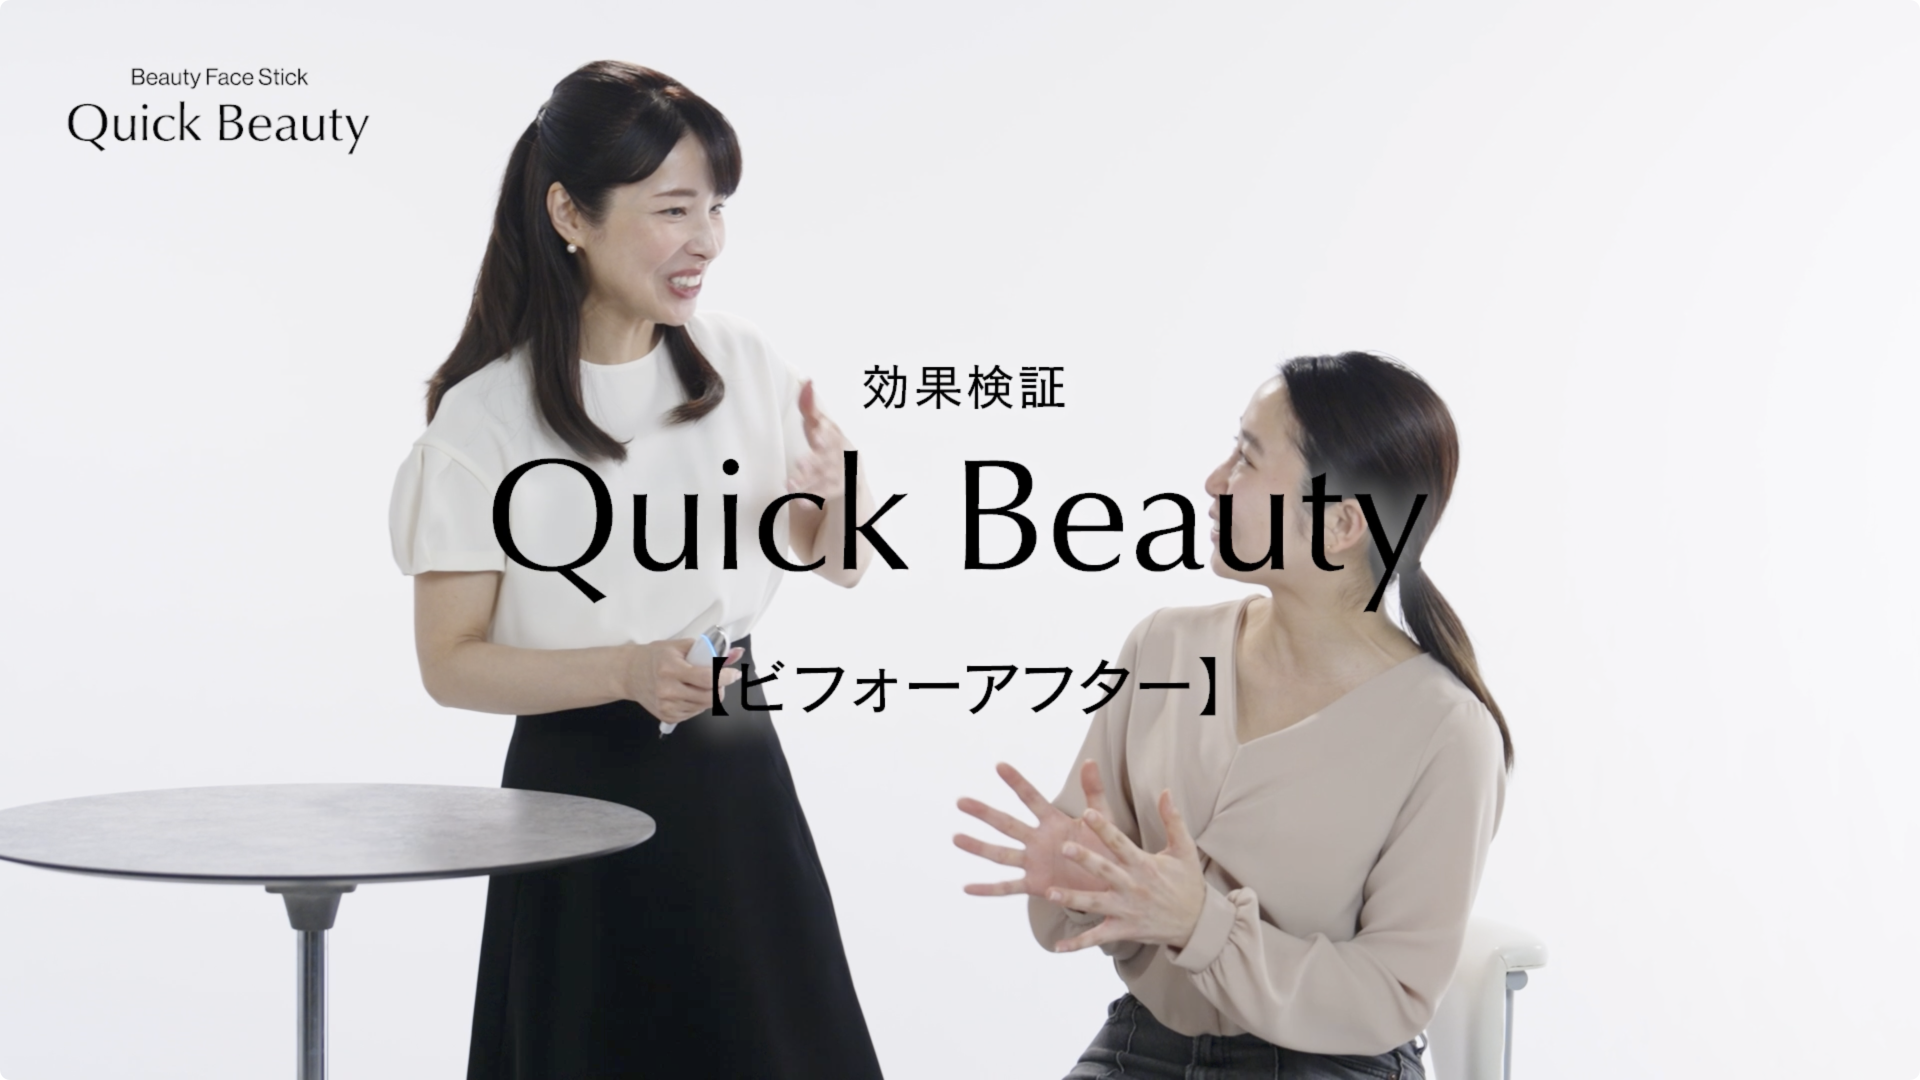 STELLA BEAUTE Beauty Face Stick 2.0 商品PR「 10分美顔チャレンジ Quick Beauty」